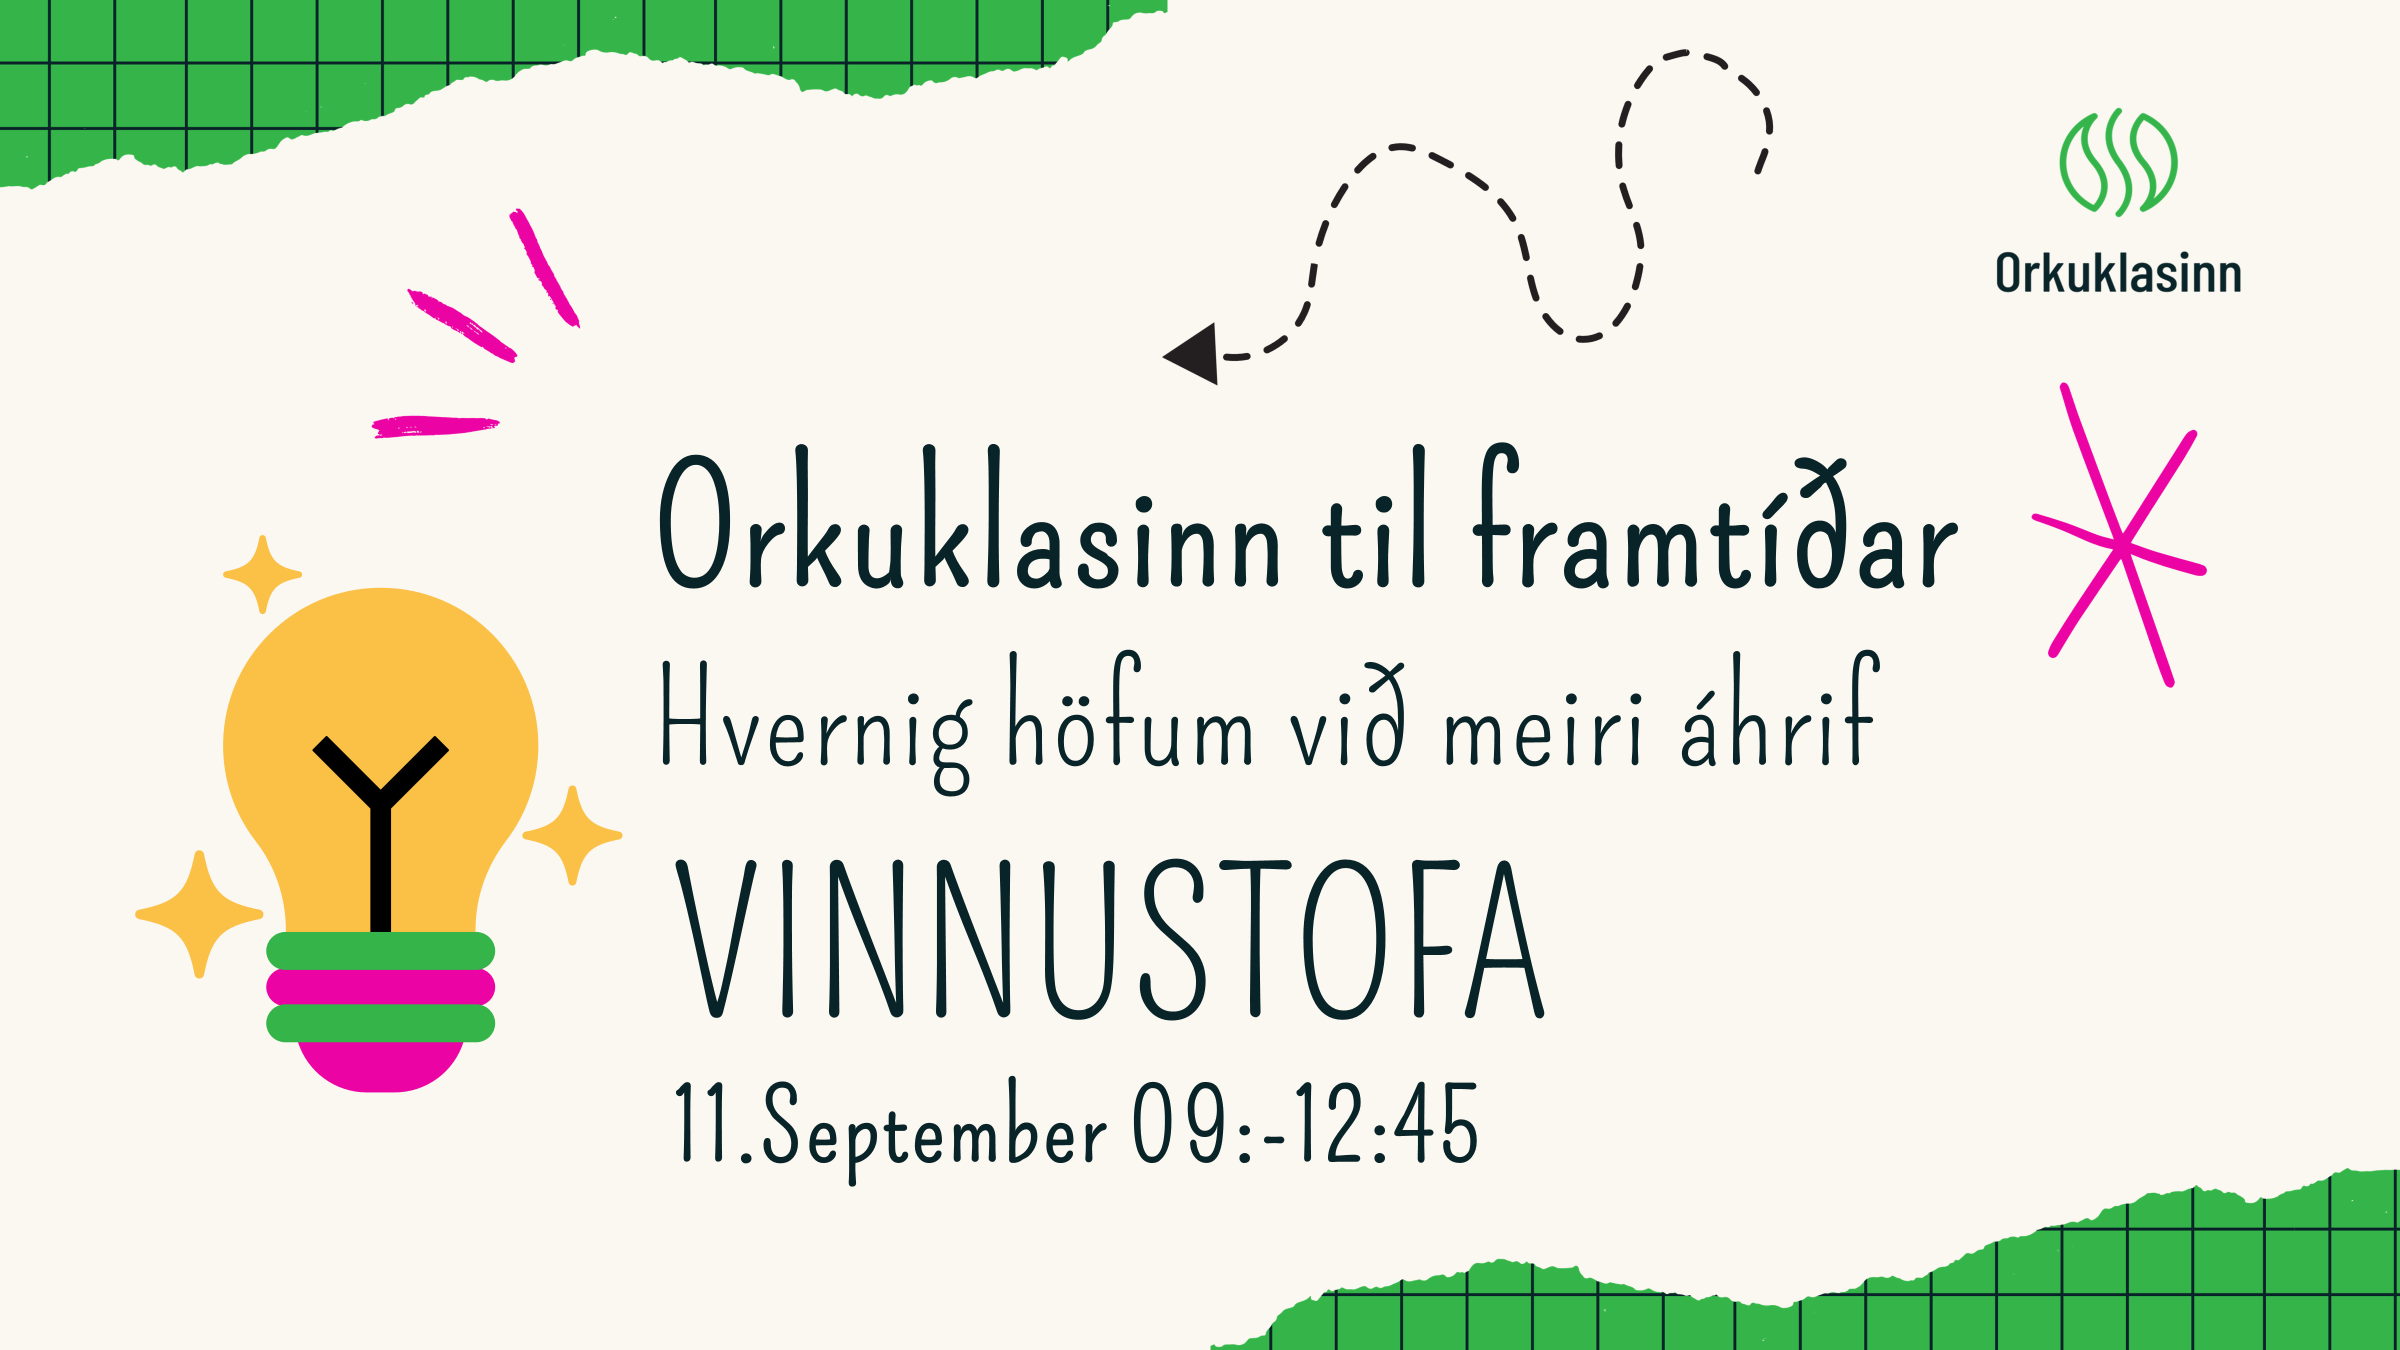 Image for event - Vinnustofa